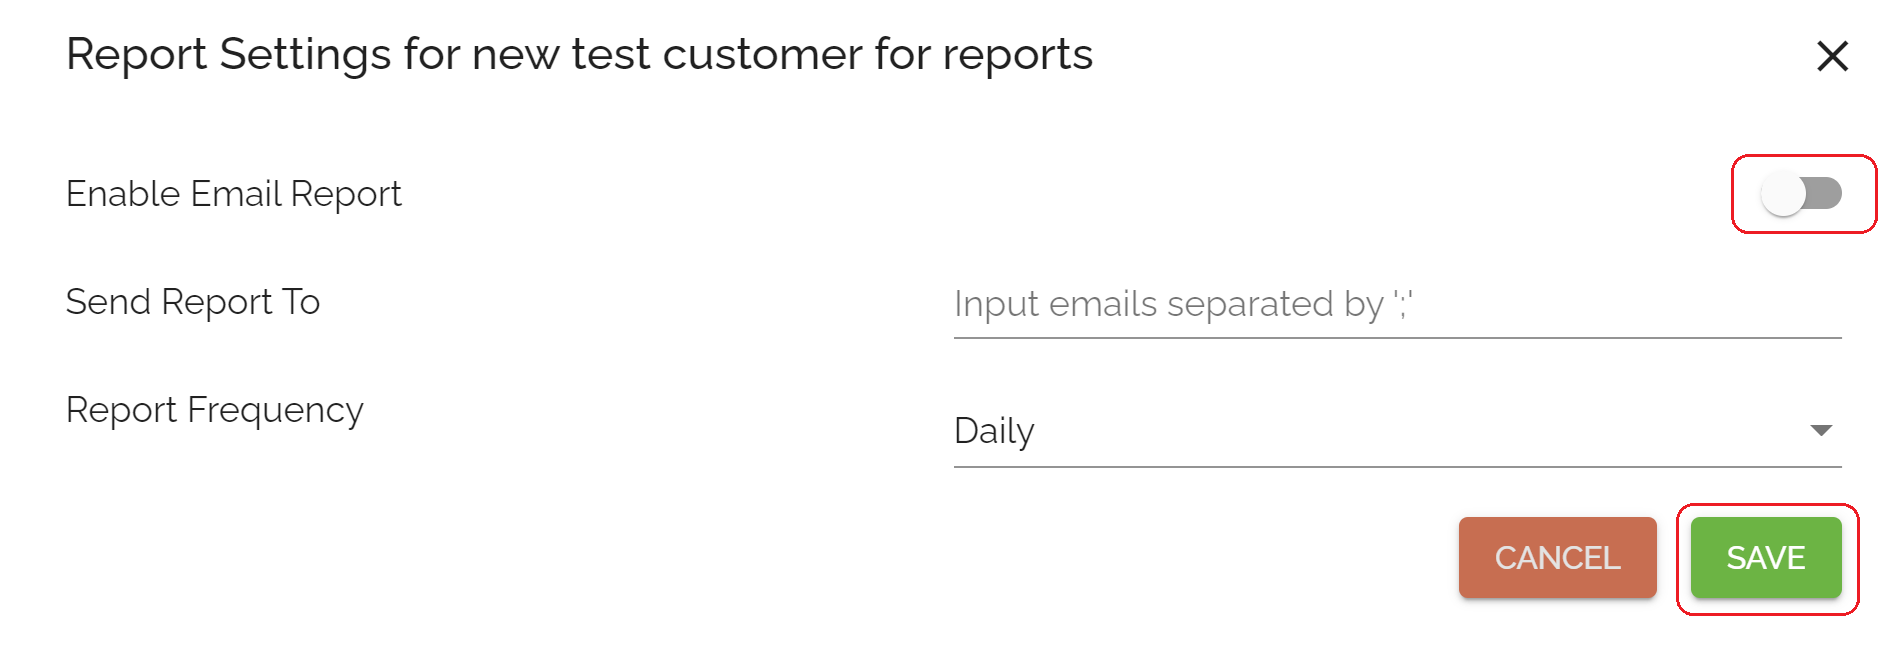 set-customer-report2.png